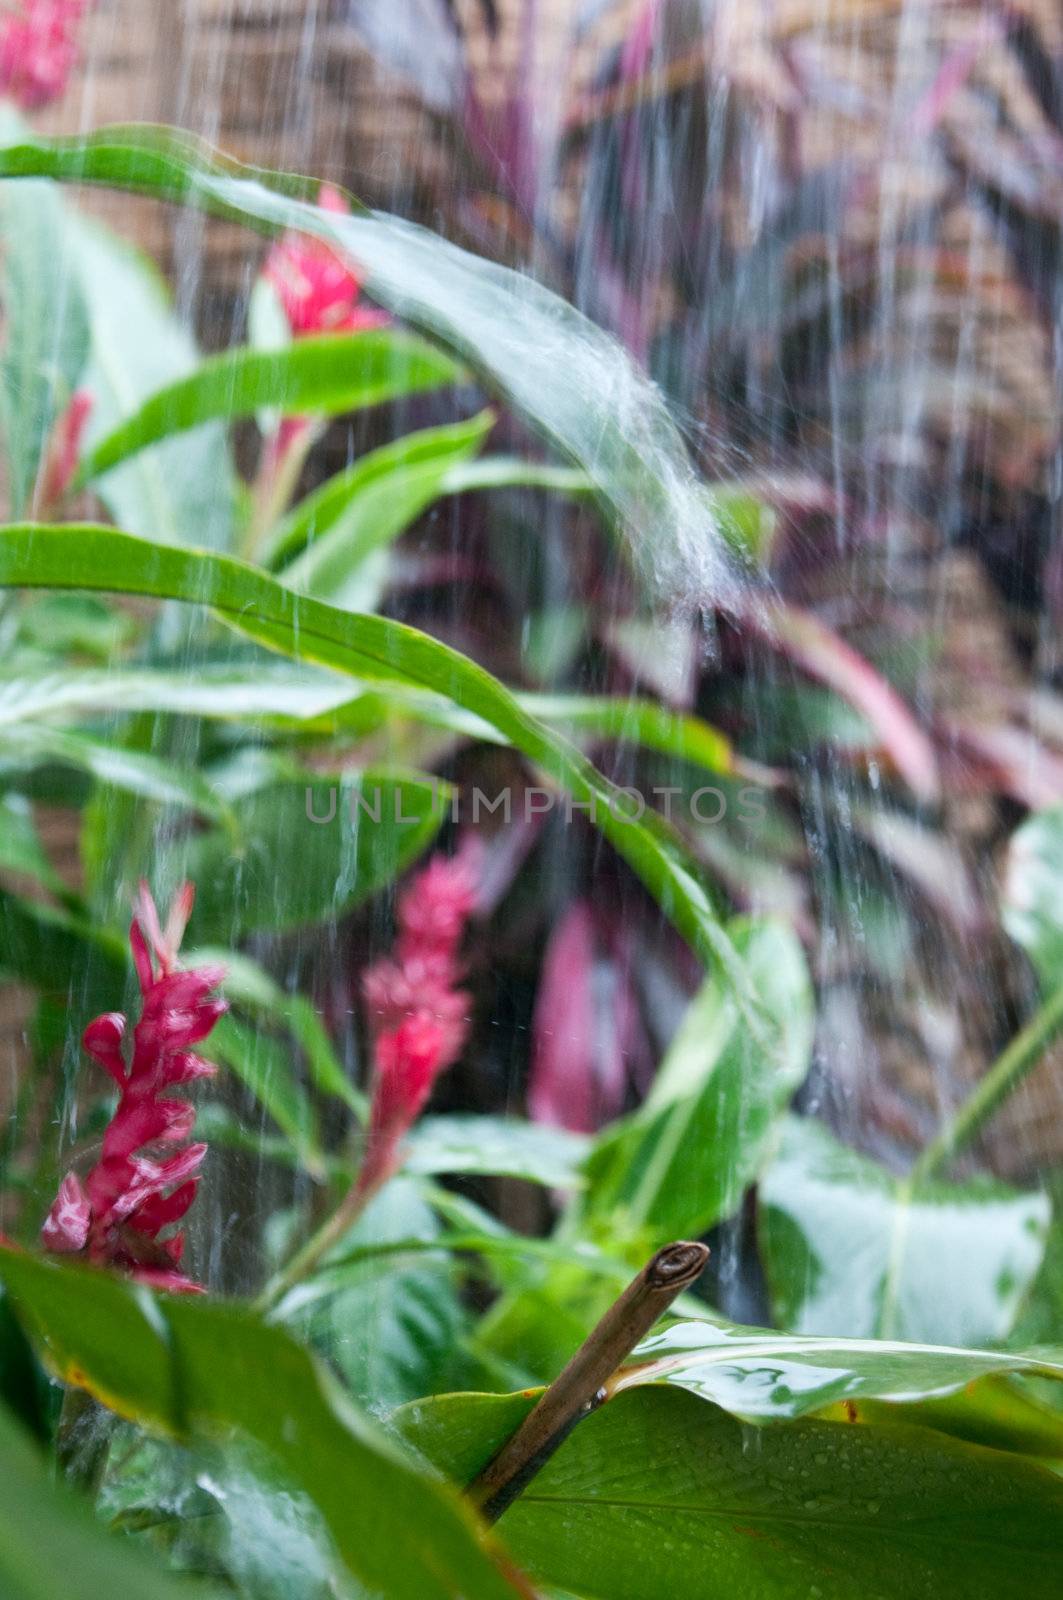 Flower under the rain by dyvan